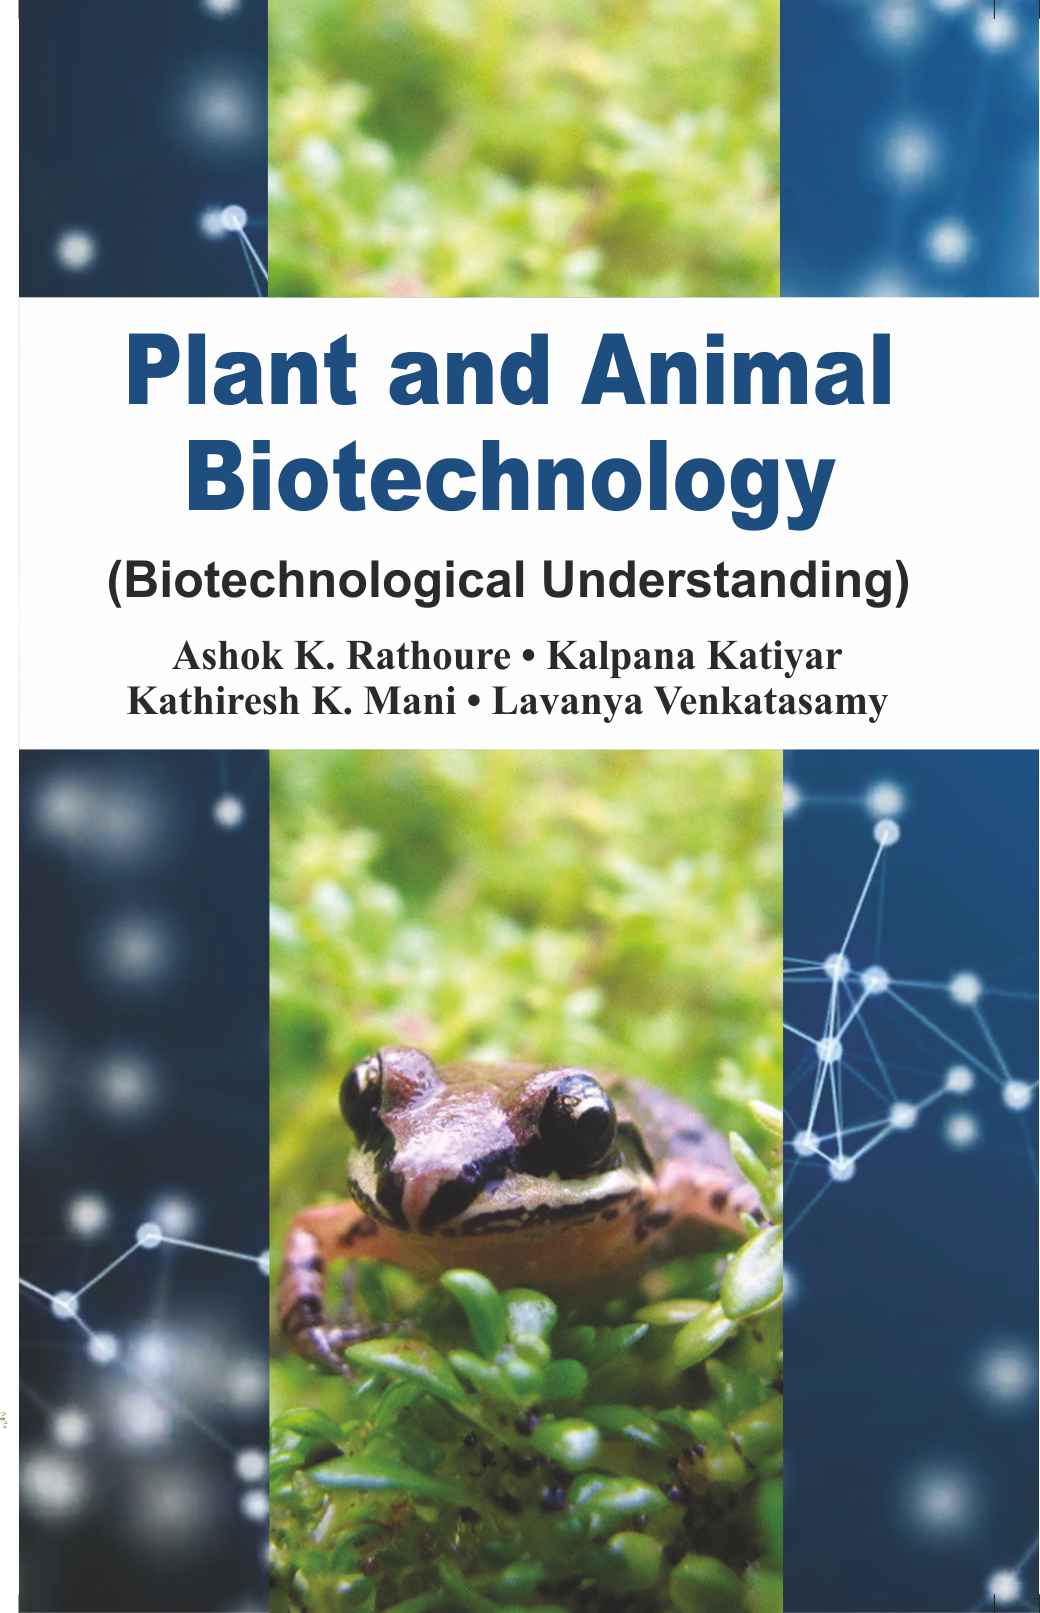 Plant & Animal Biotechnology